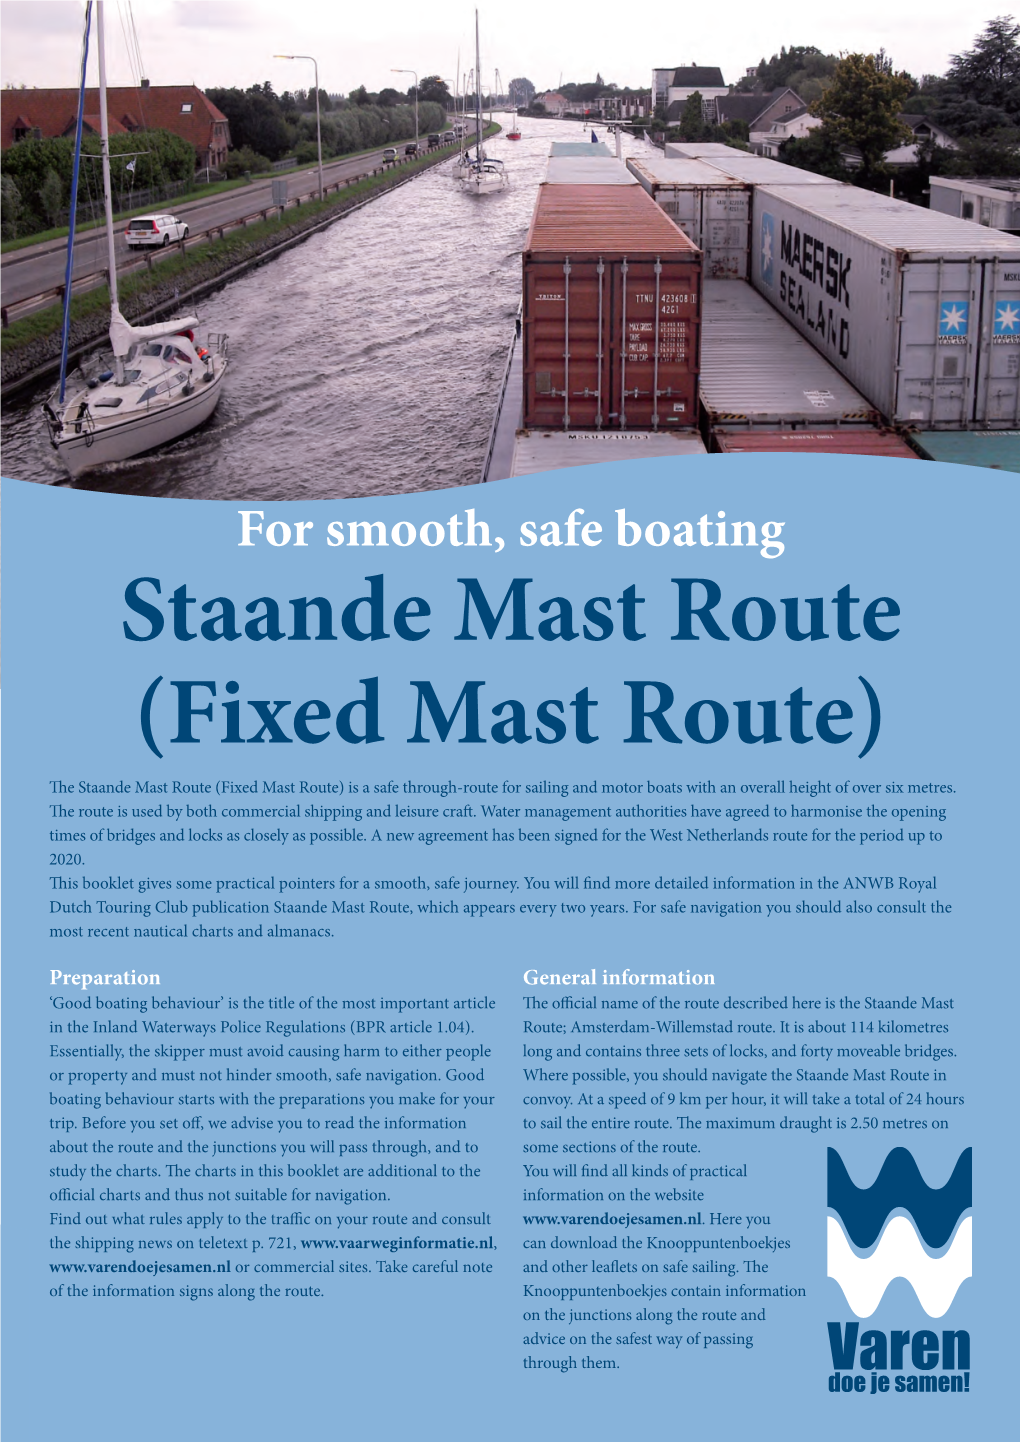 Staande Mast Route